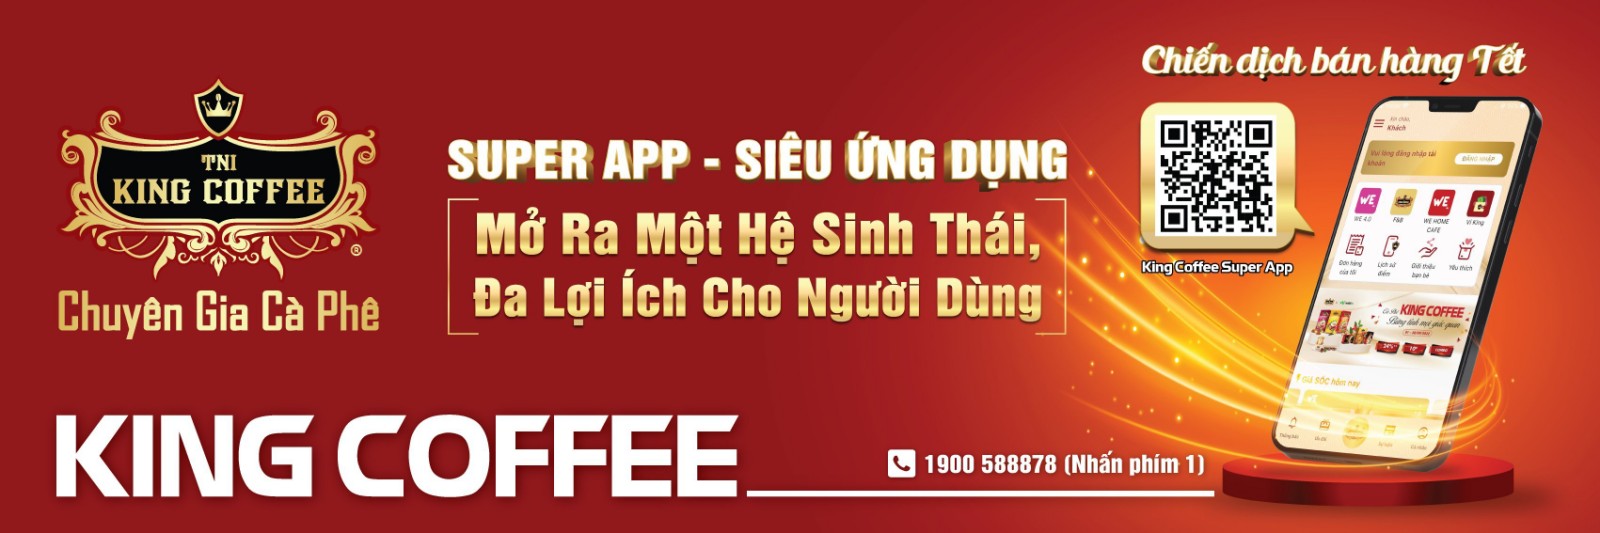 King Coffee Super App Banner